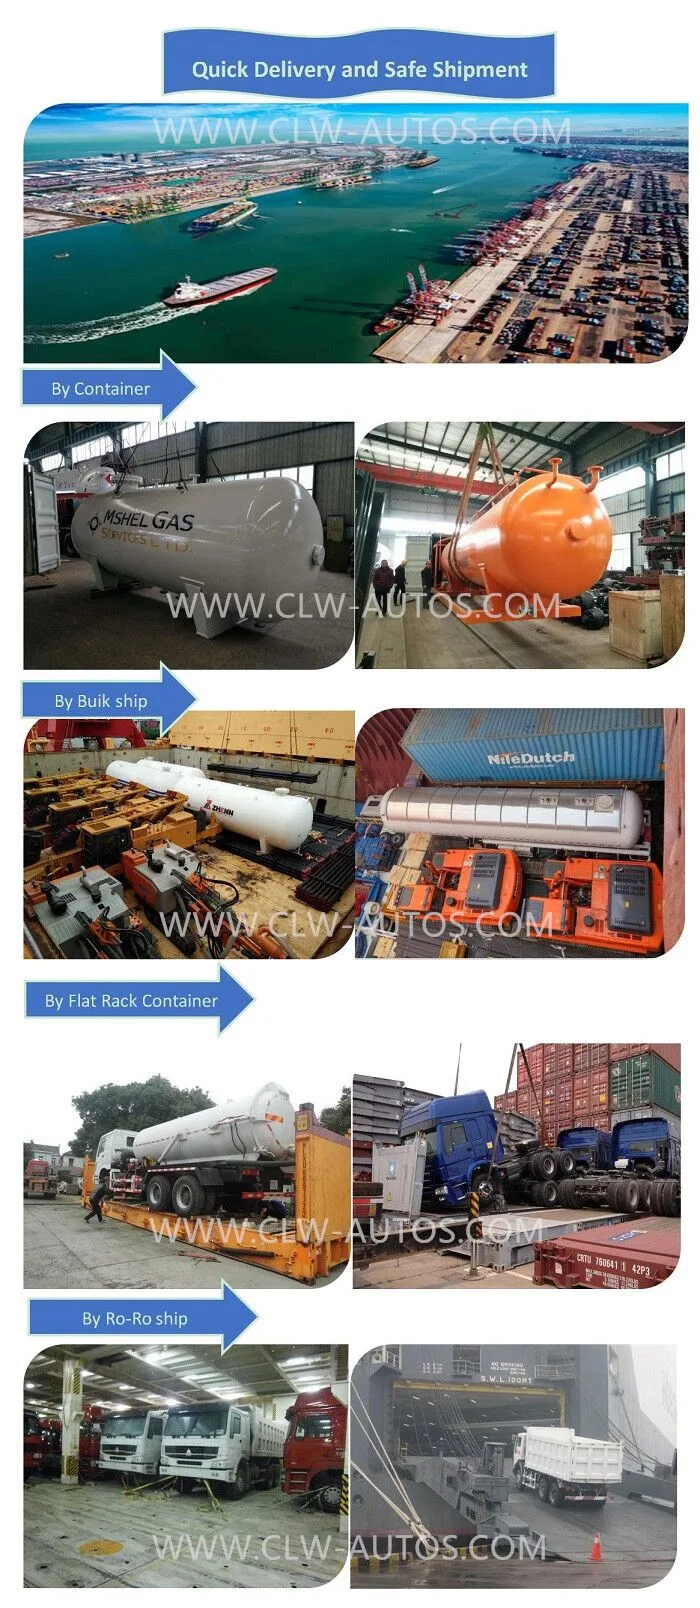 China Dongfeng 3cbm/4cbm/5cbm Refuse Collector Vehicle 3000L/4000L/5000L Trashmaster Kitchen Garbage Truck